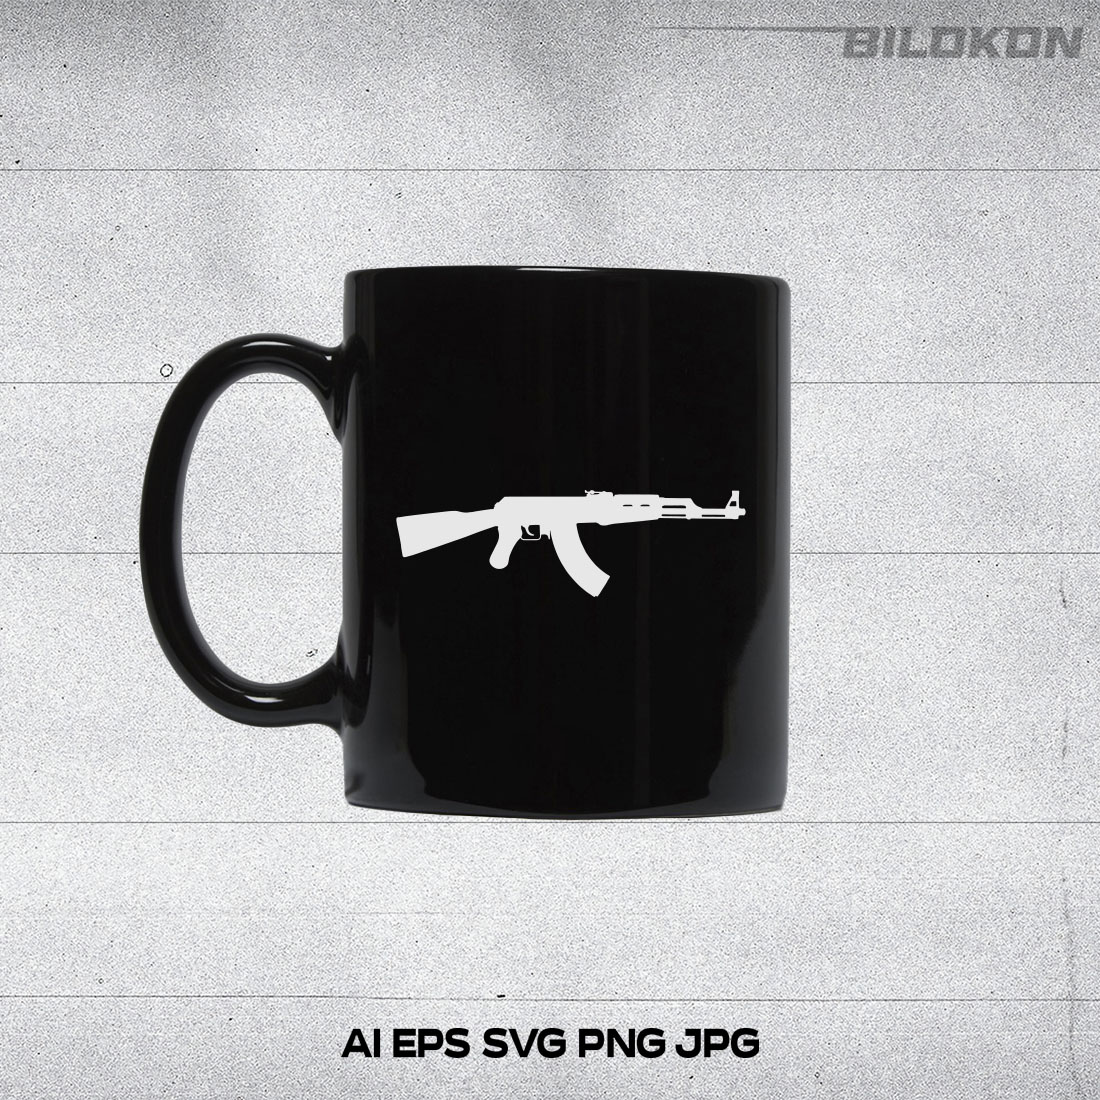 Big black tea cup with AK-47.